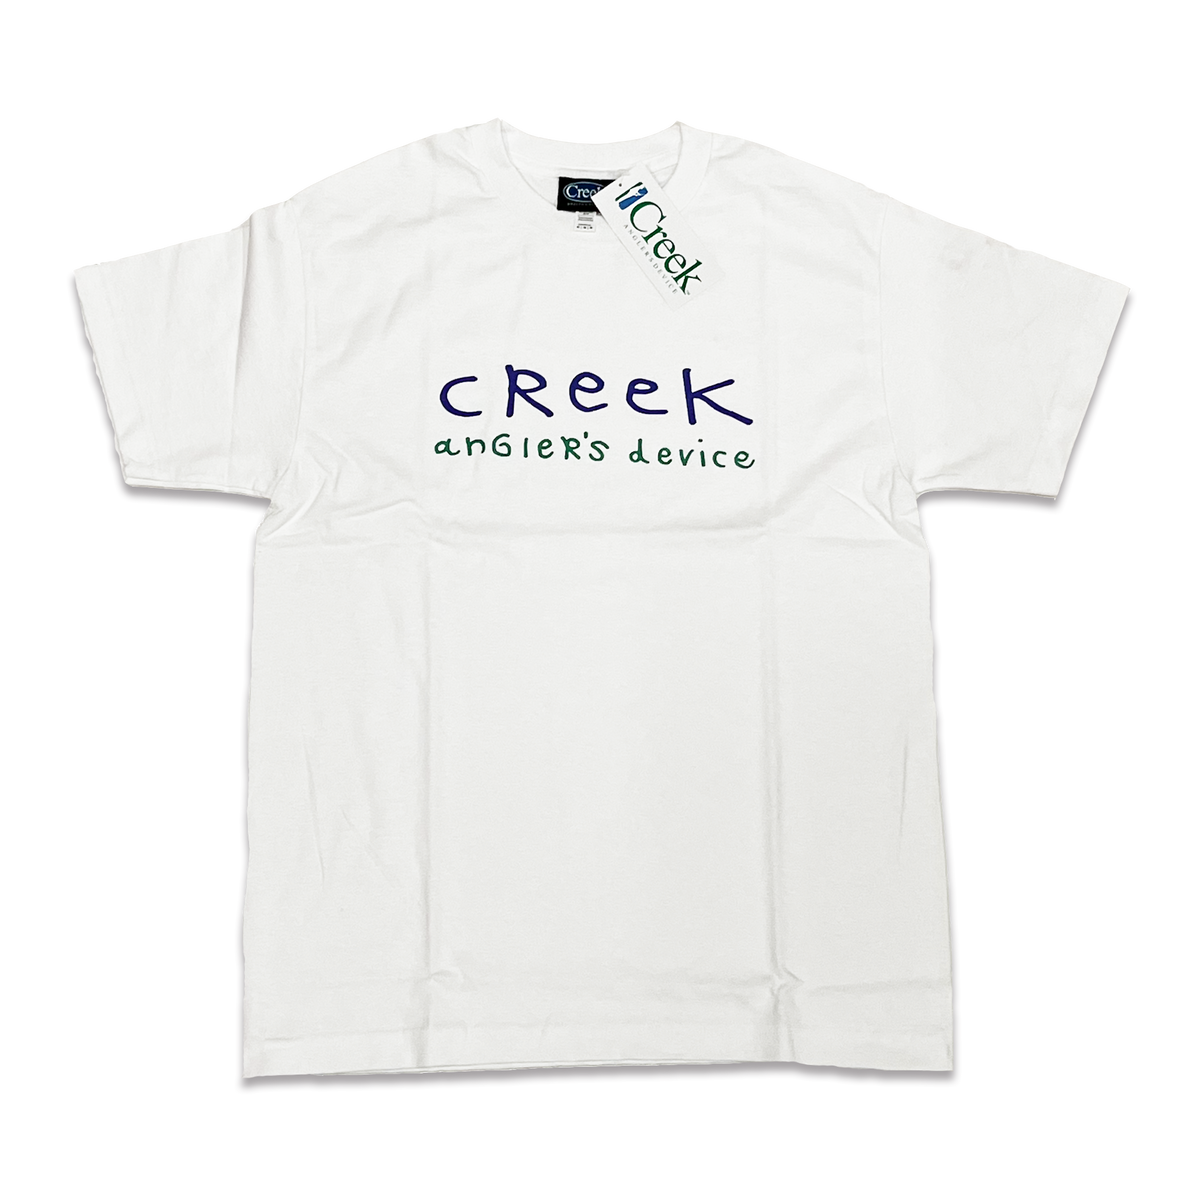 Creek Angler's Device Tシャツ ホワイト サイズ L - ウェア